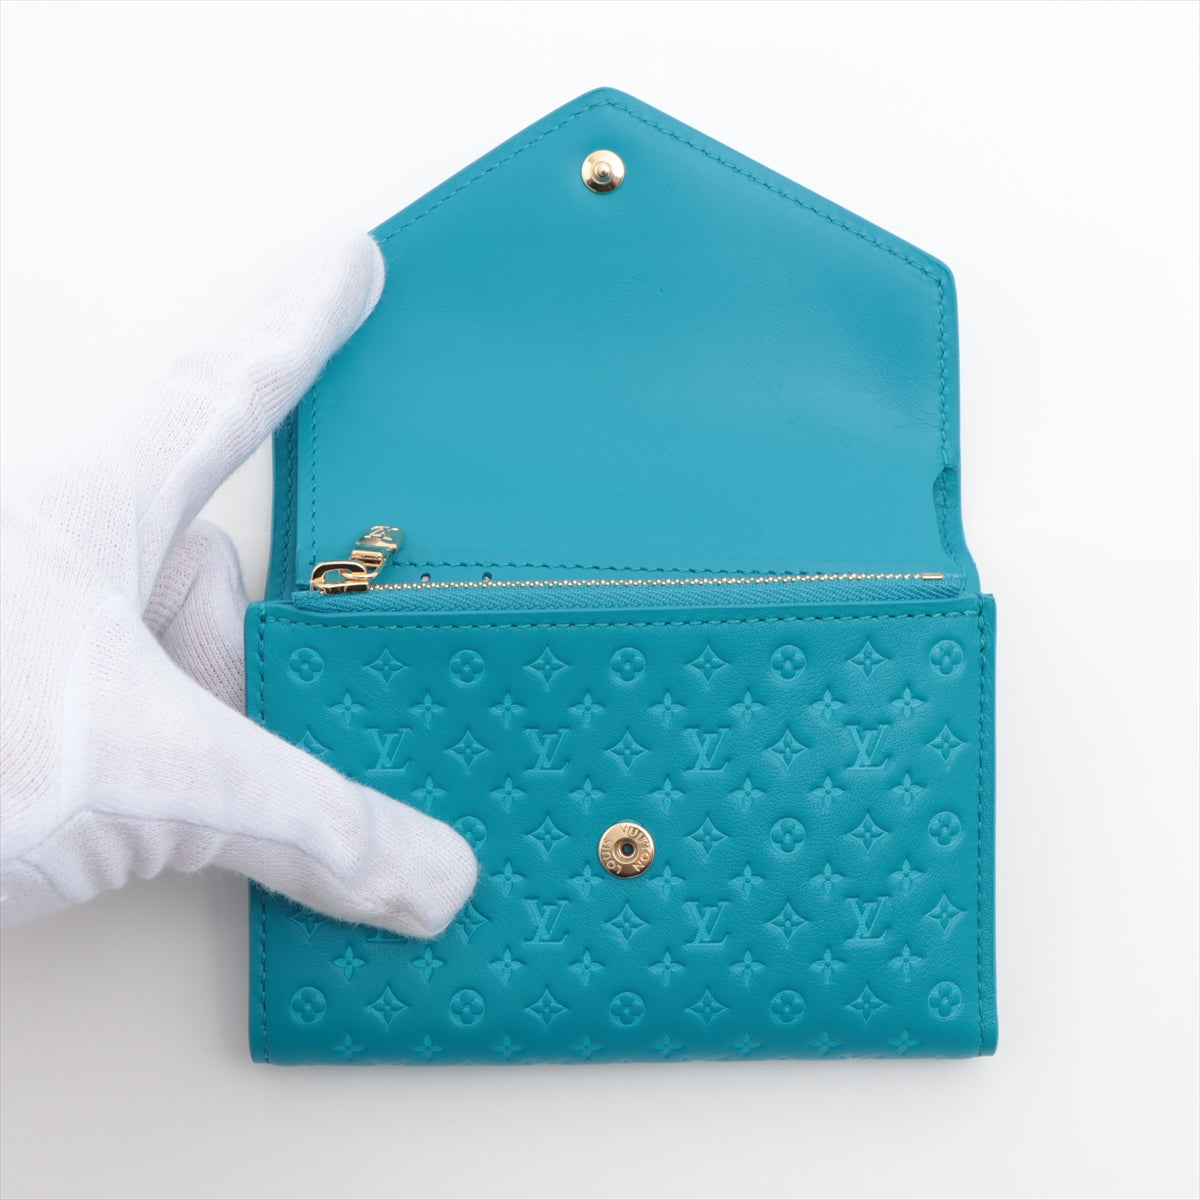 Louis Vuitton Nano Glam Portefeuille Victorine M82314 Blue Compact Wallet Responsive RFID